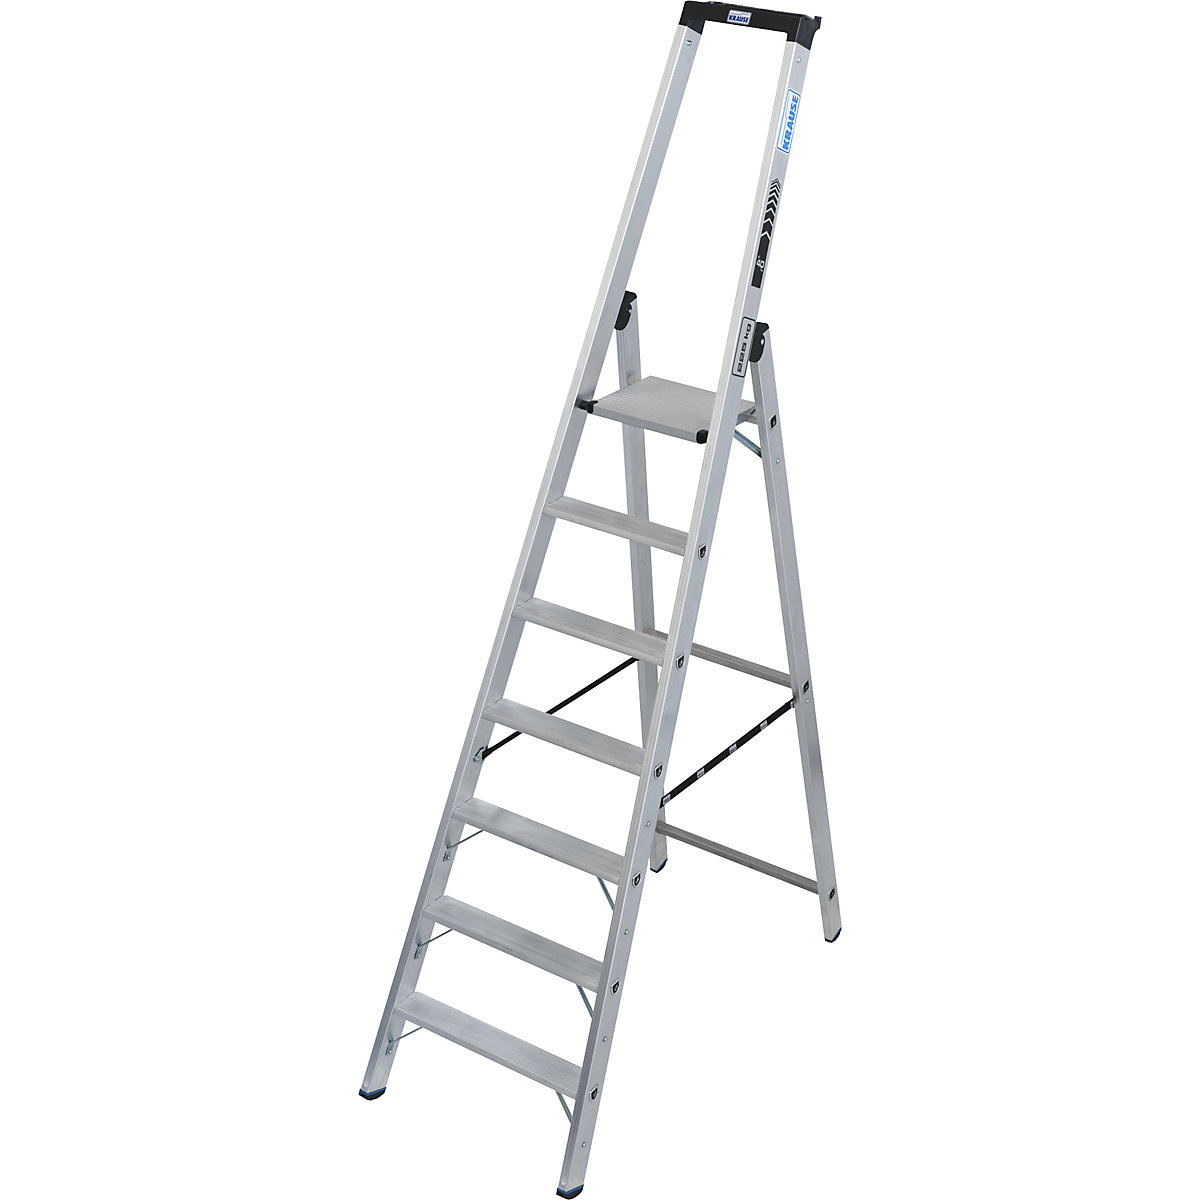 Heavy duty step ladder - KRAUSE